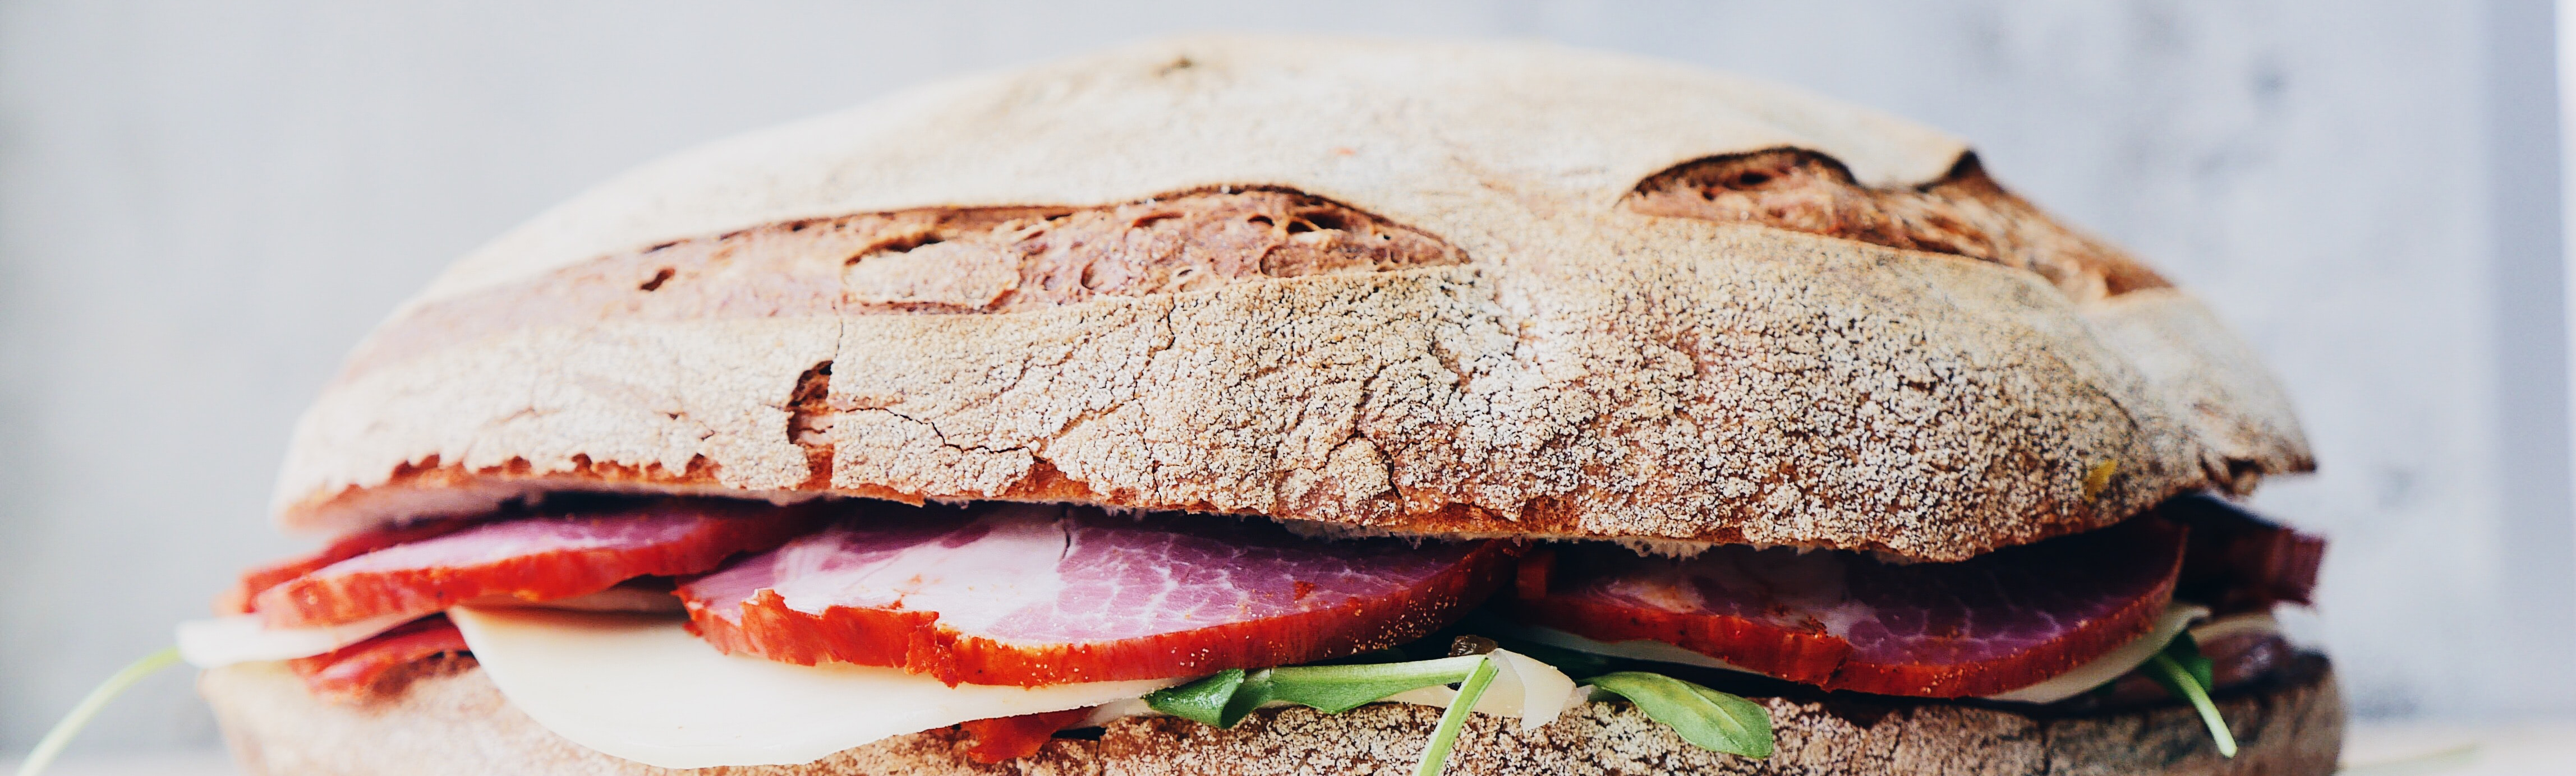 Header Foodservice Sandwich 5441x1639 ratio